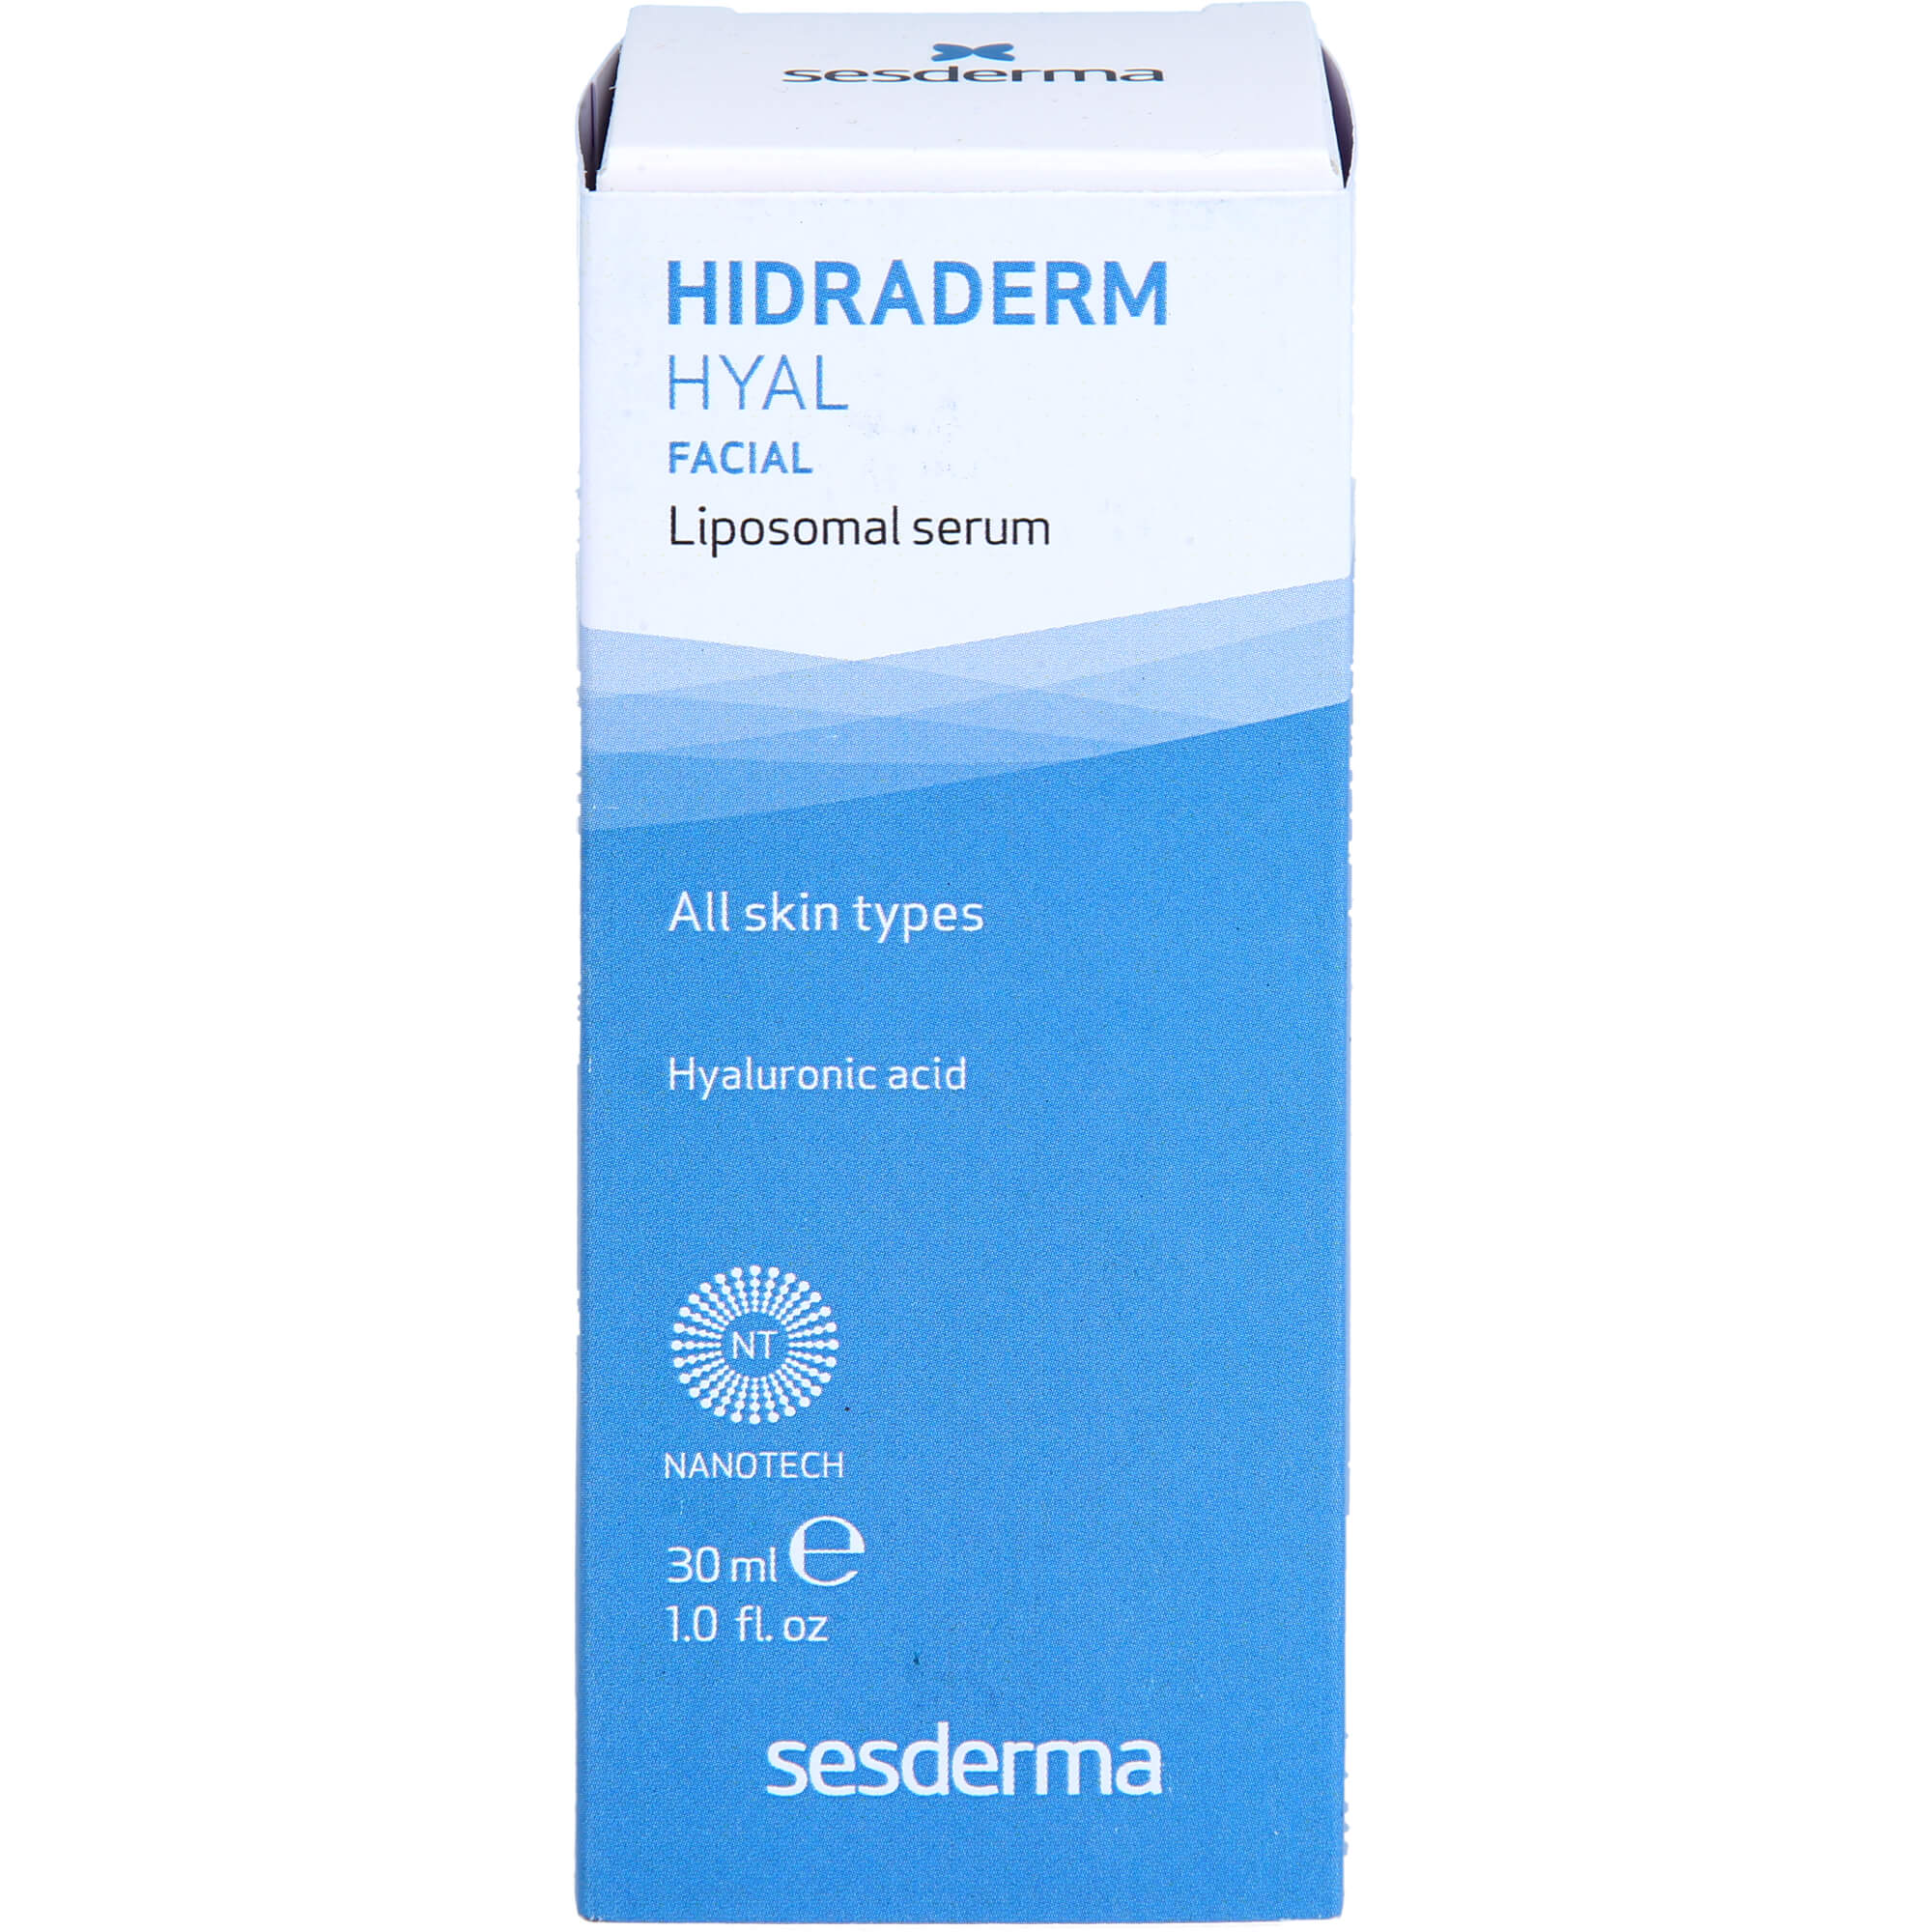 HIDRADERM HYAL liposomales Serum